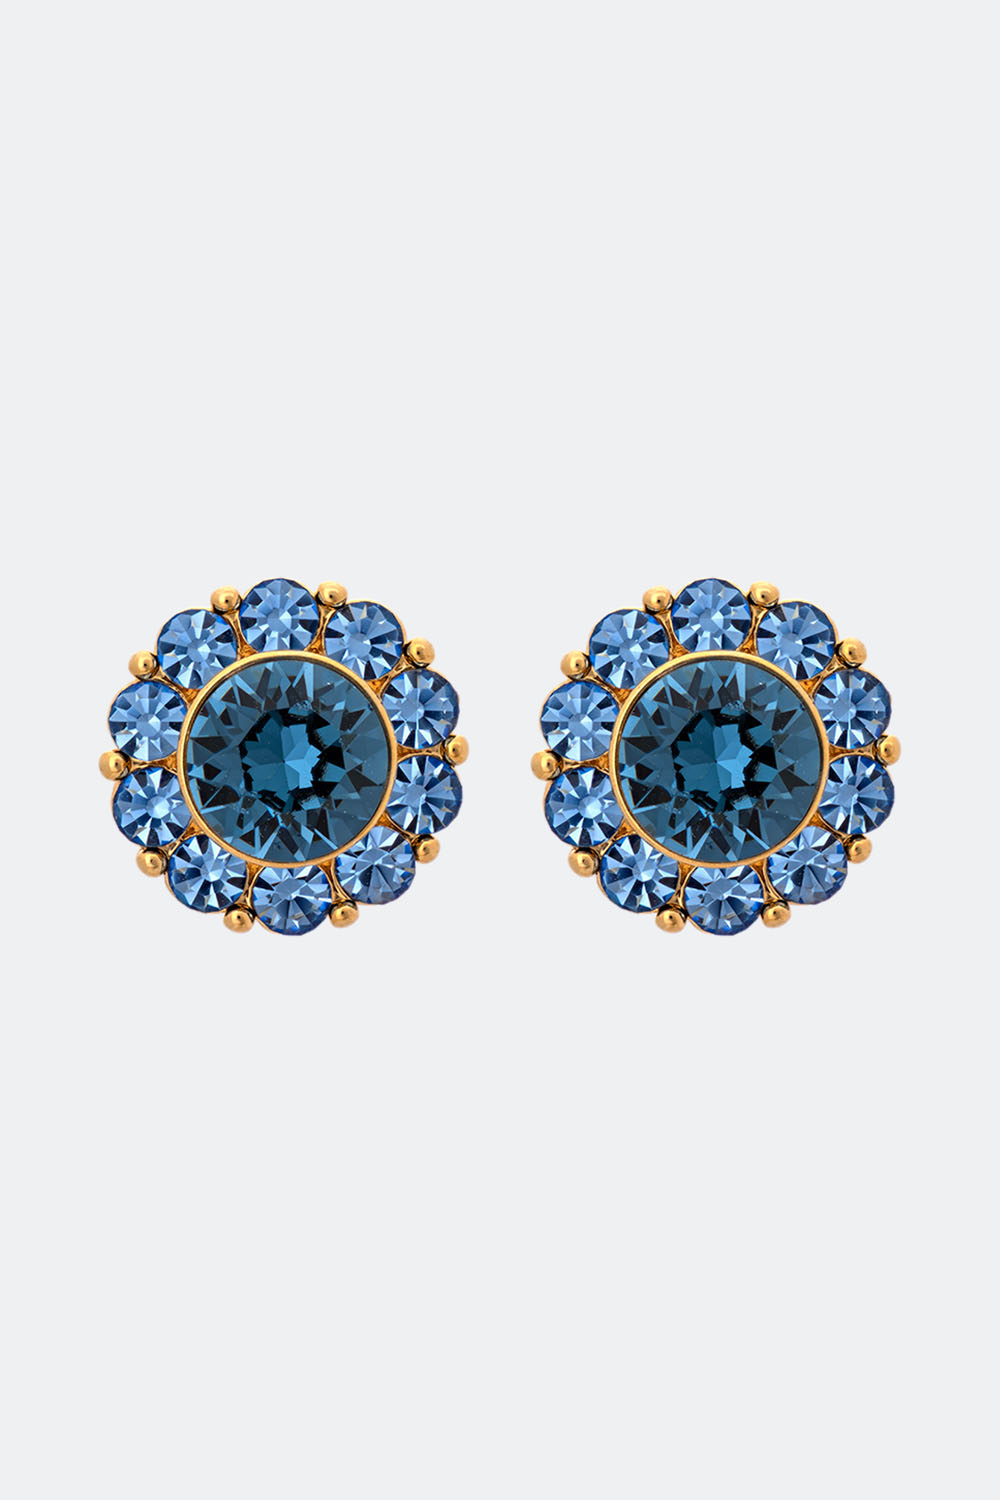 Miss Sofia earrings - Royal blue